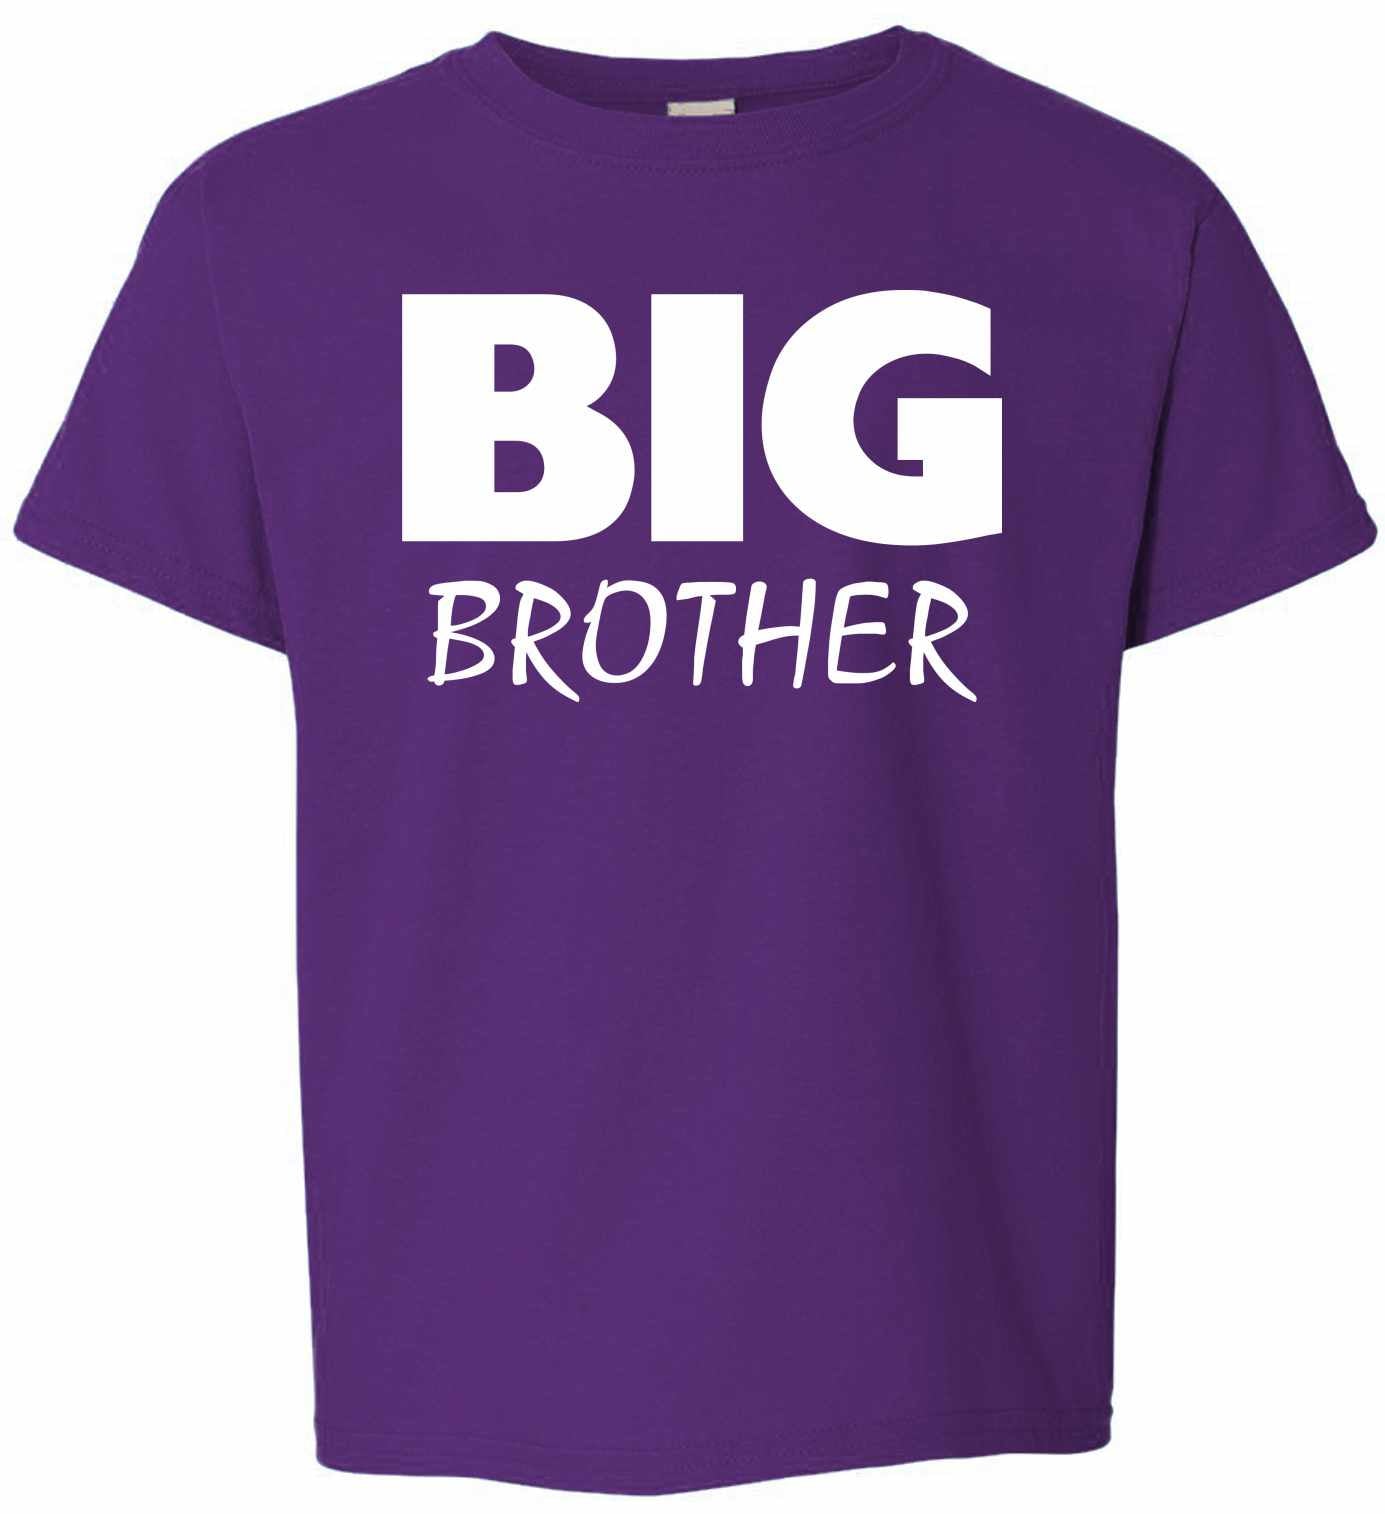 Big Brother on Kids T-Shirt (#953-201)